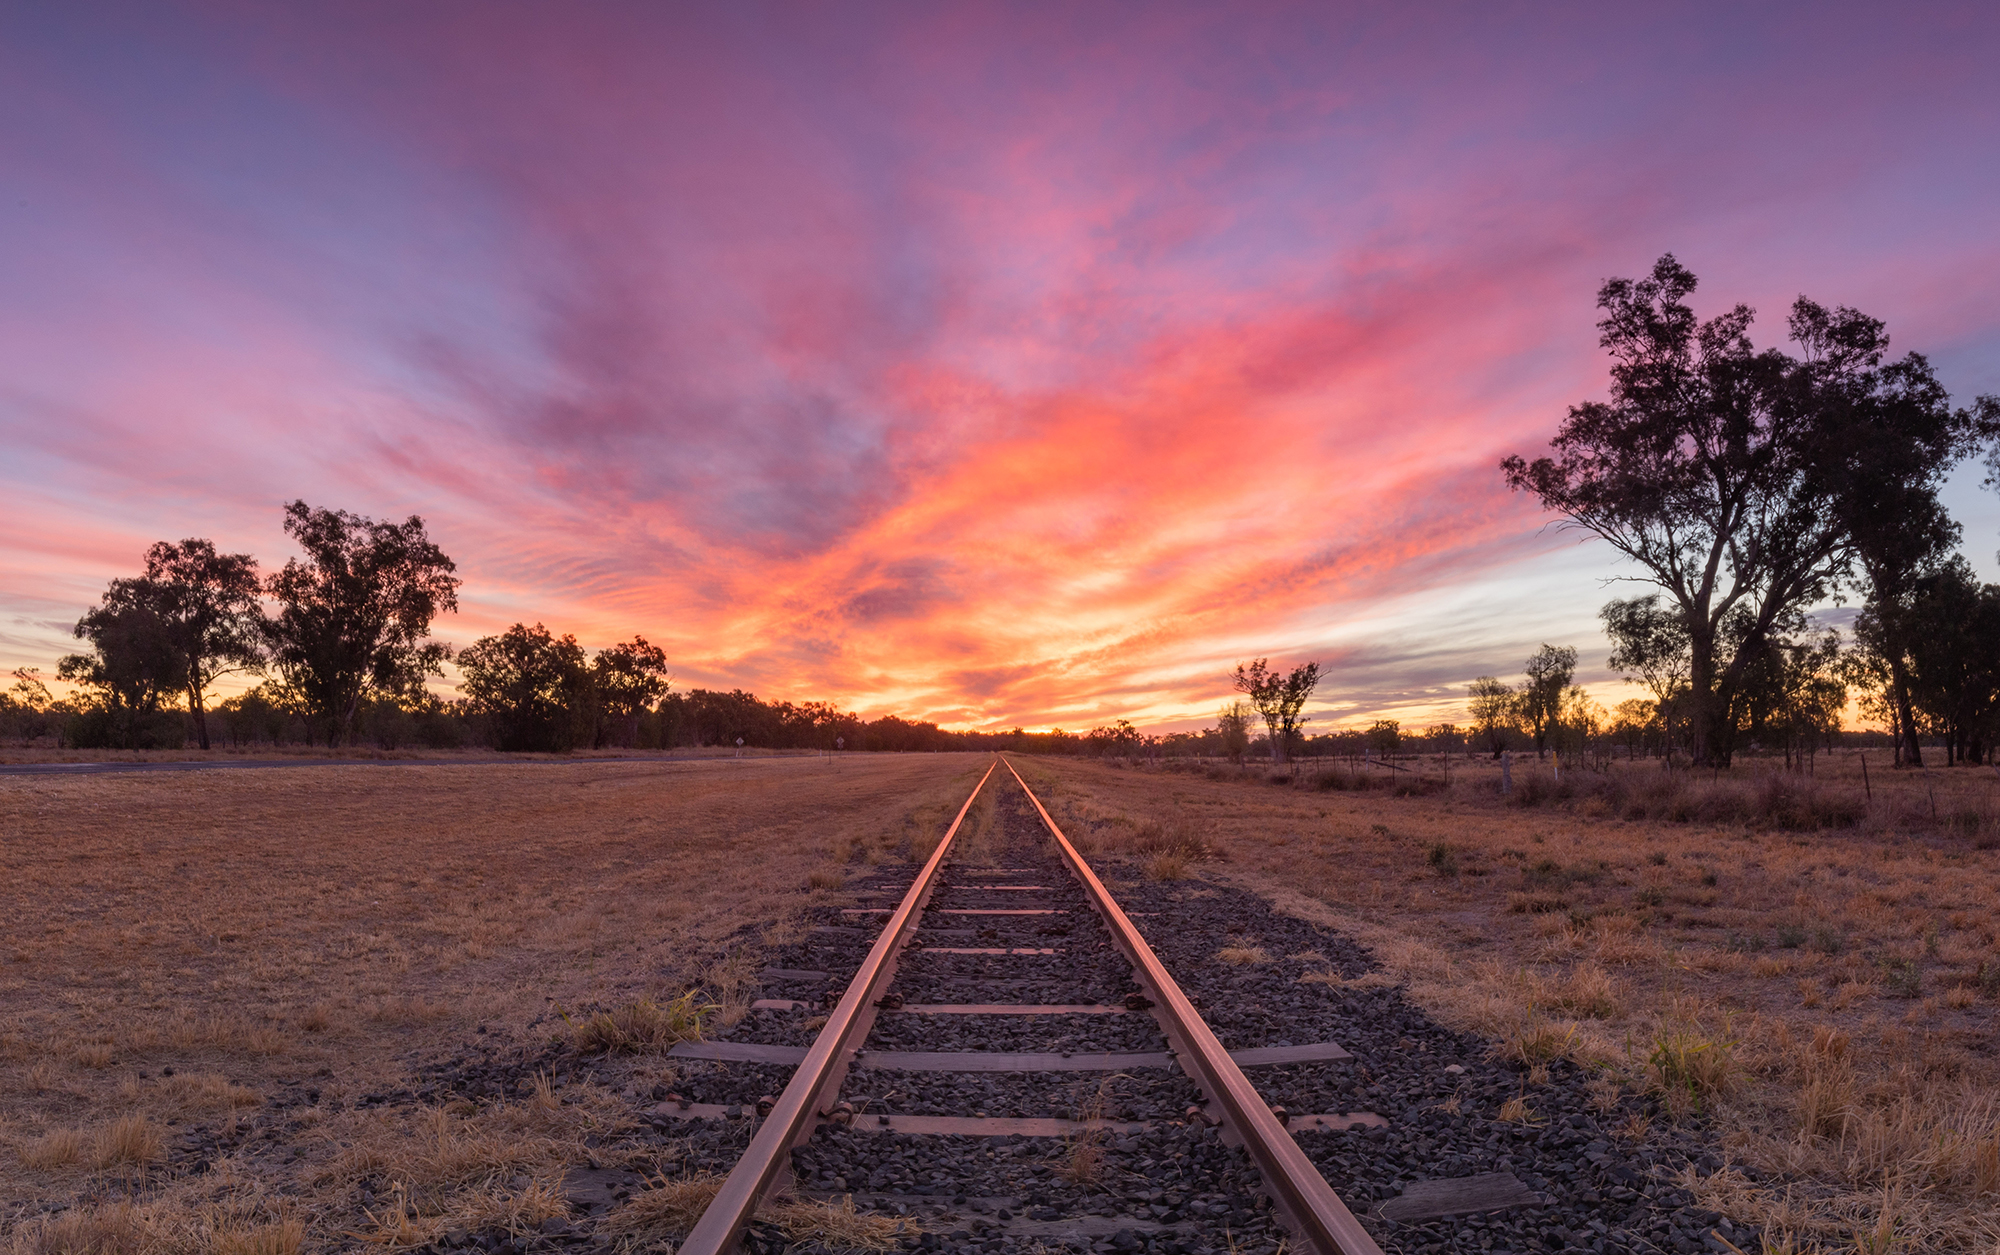  Sunset Over Railway Tracks